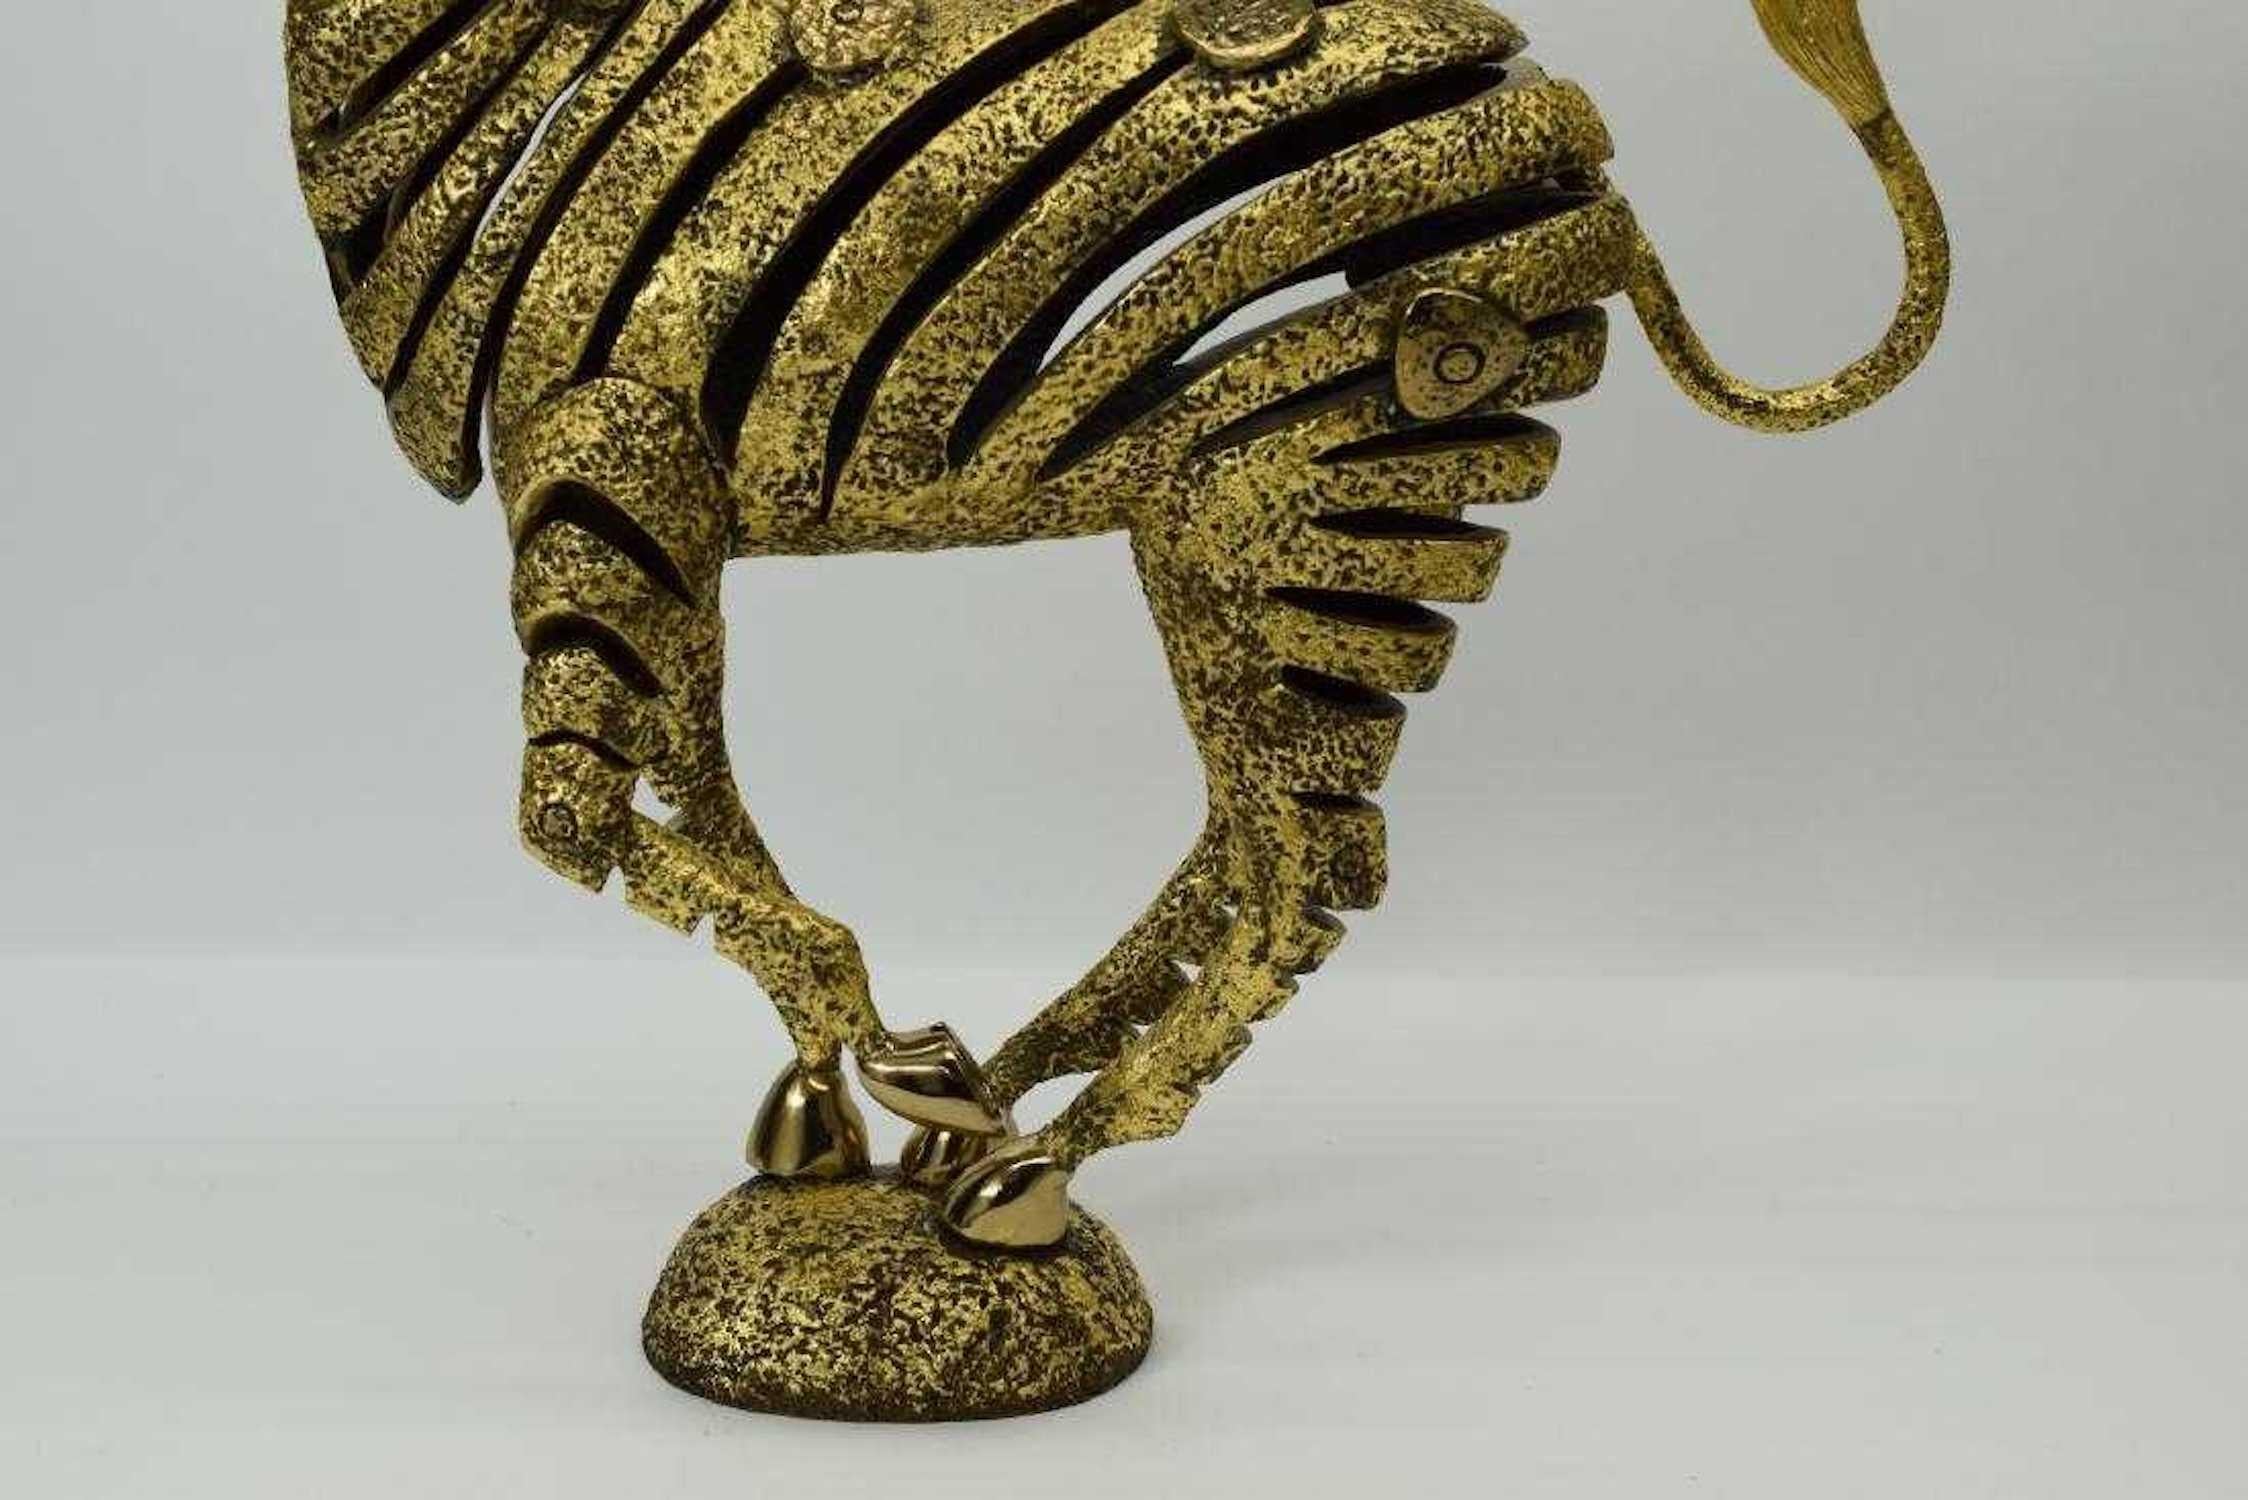 Jiang Golden Brozne Zebra Bronze Sculpture Contemporary Art For Sale 3